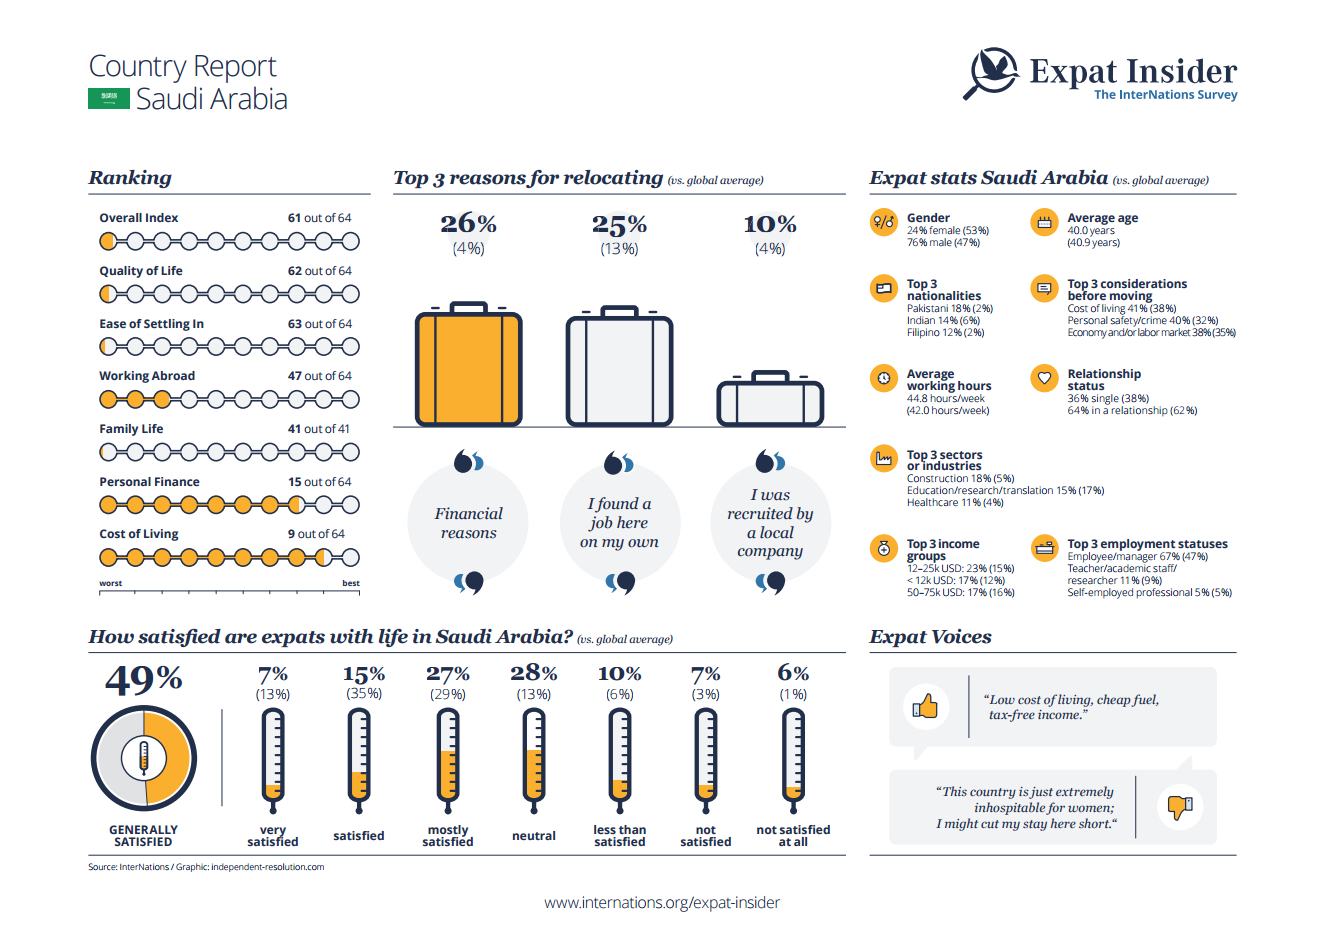 Expat statistics for Saudi Arabia - infographic